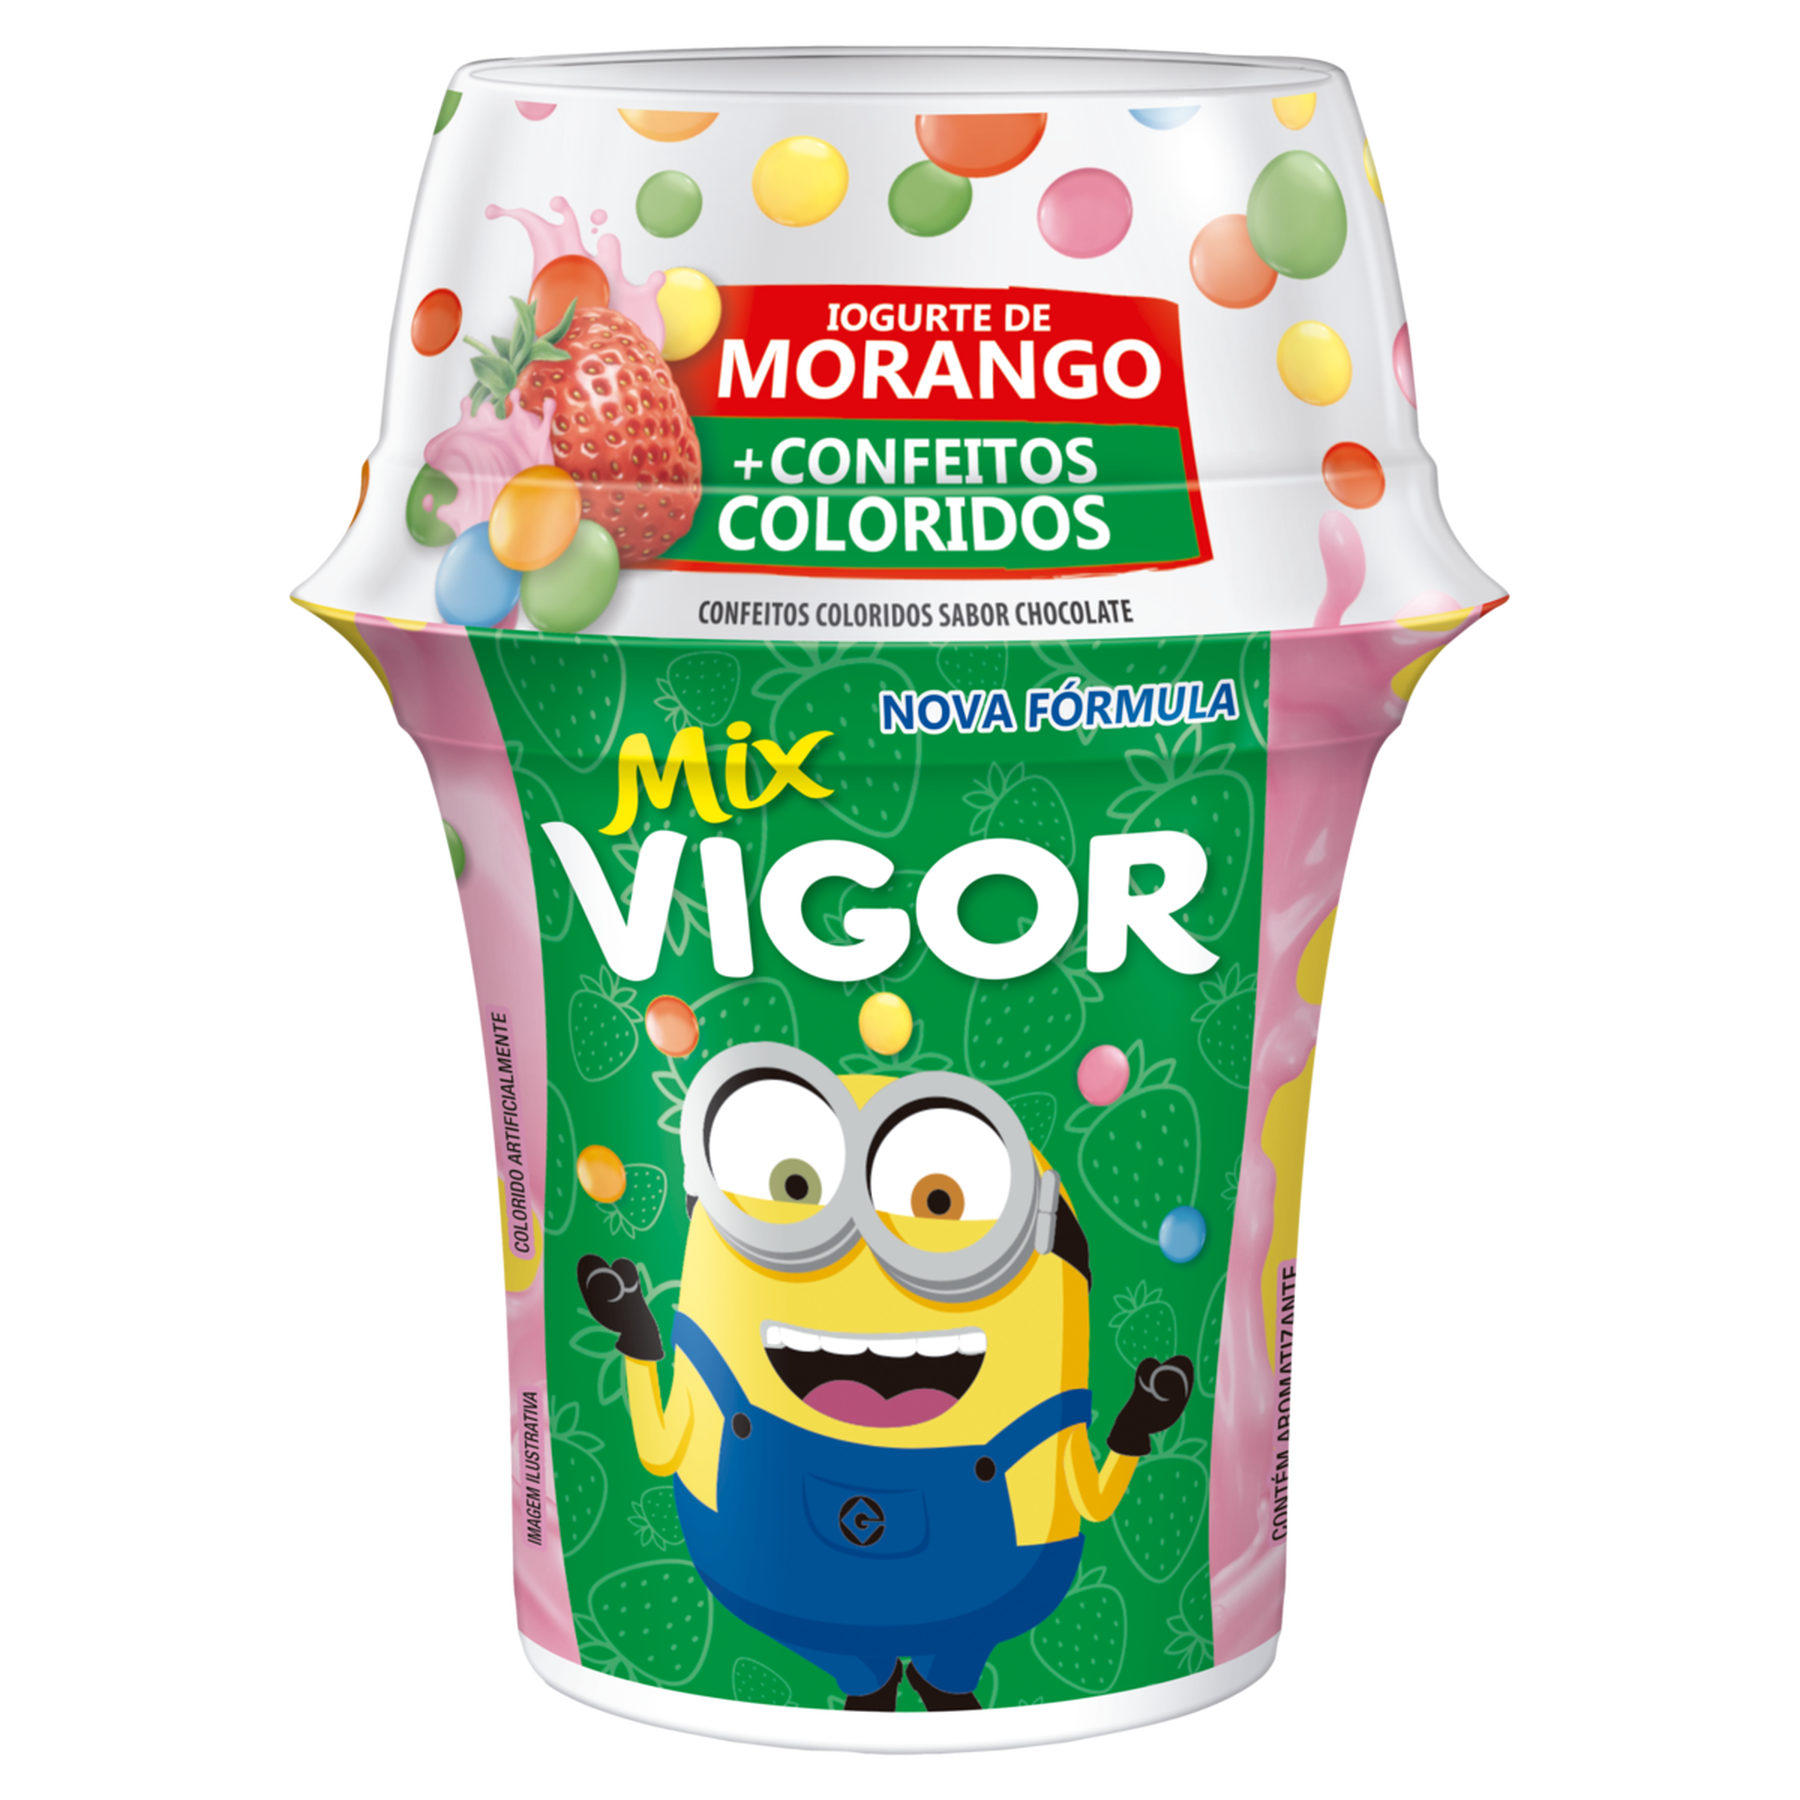 Iogurte Morango + Confeitos Coloridos Vigor Mix Copo 140g